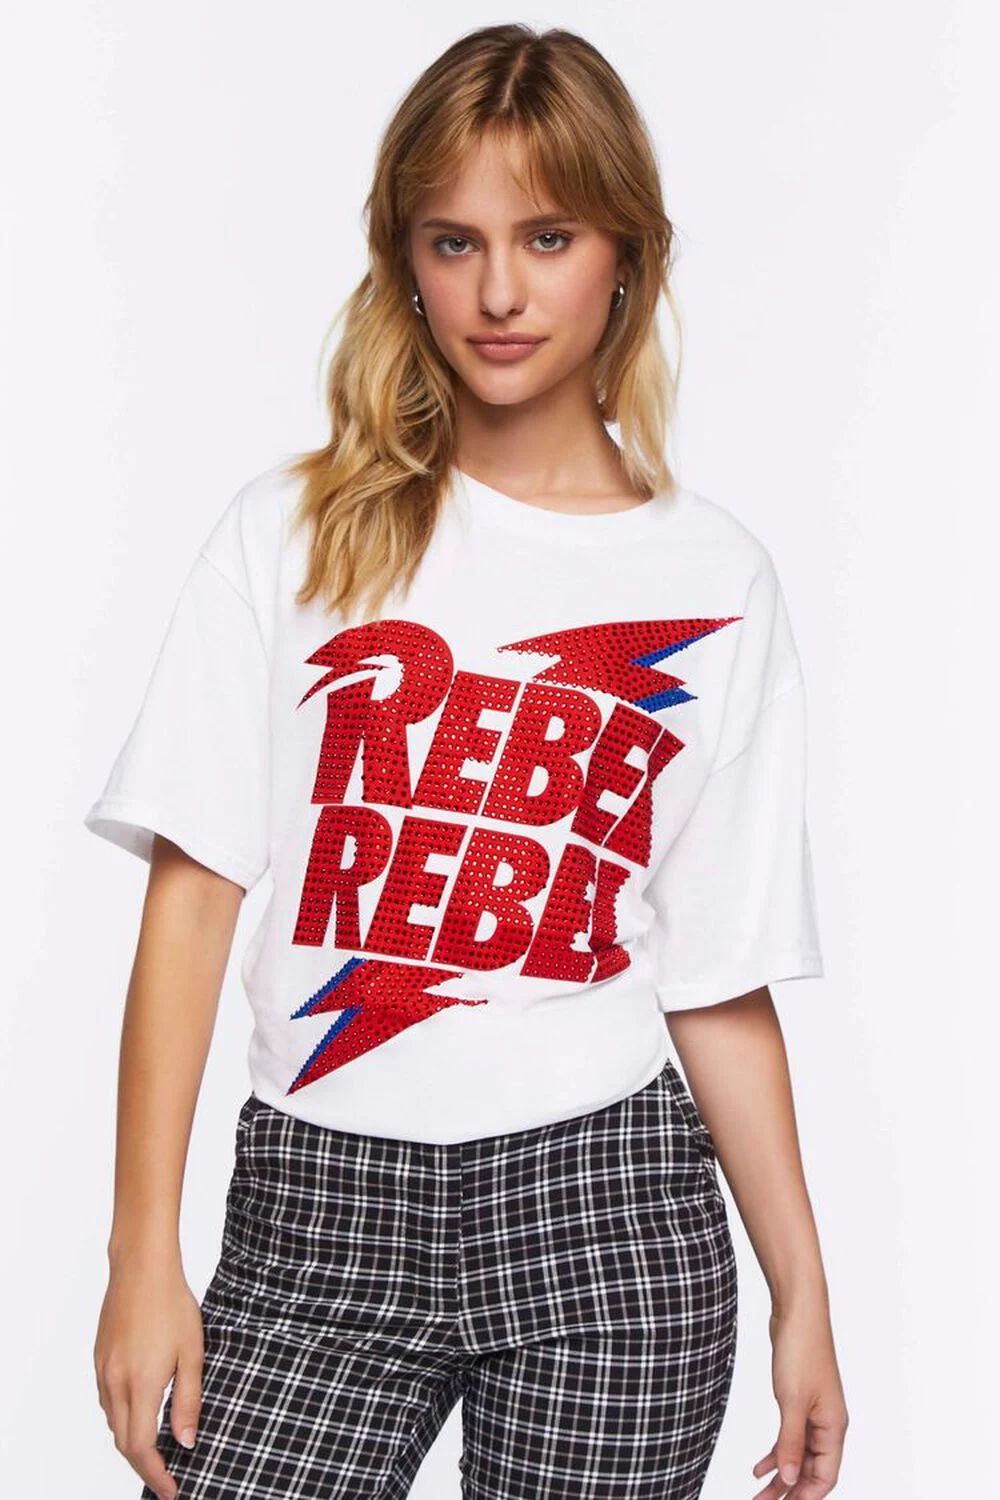 Rebel Rebel Graphic Tee | Forever 21 | Forever 21 (US)